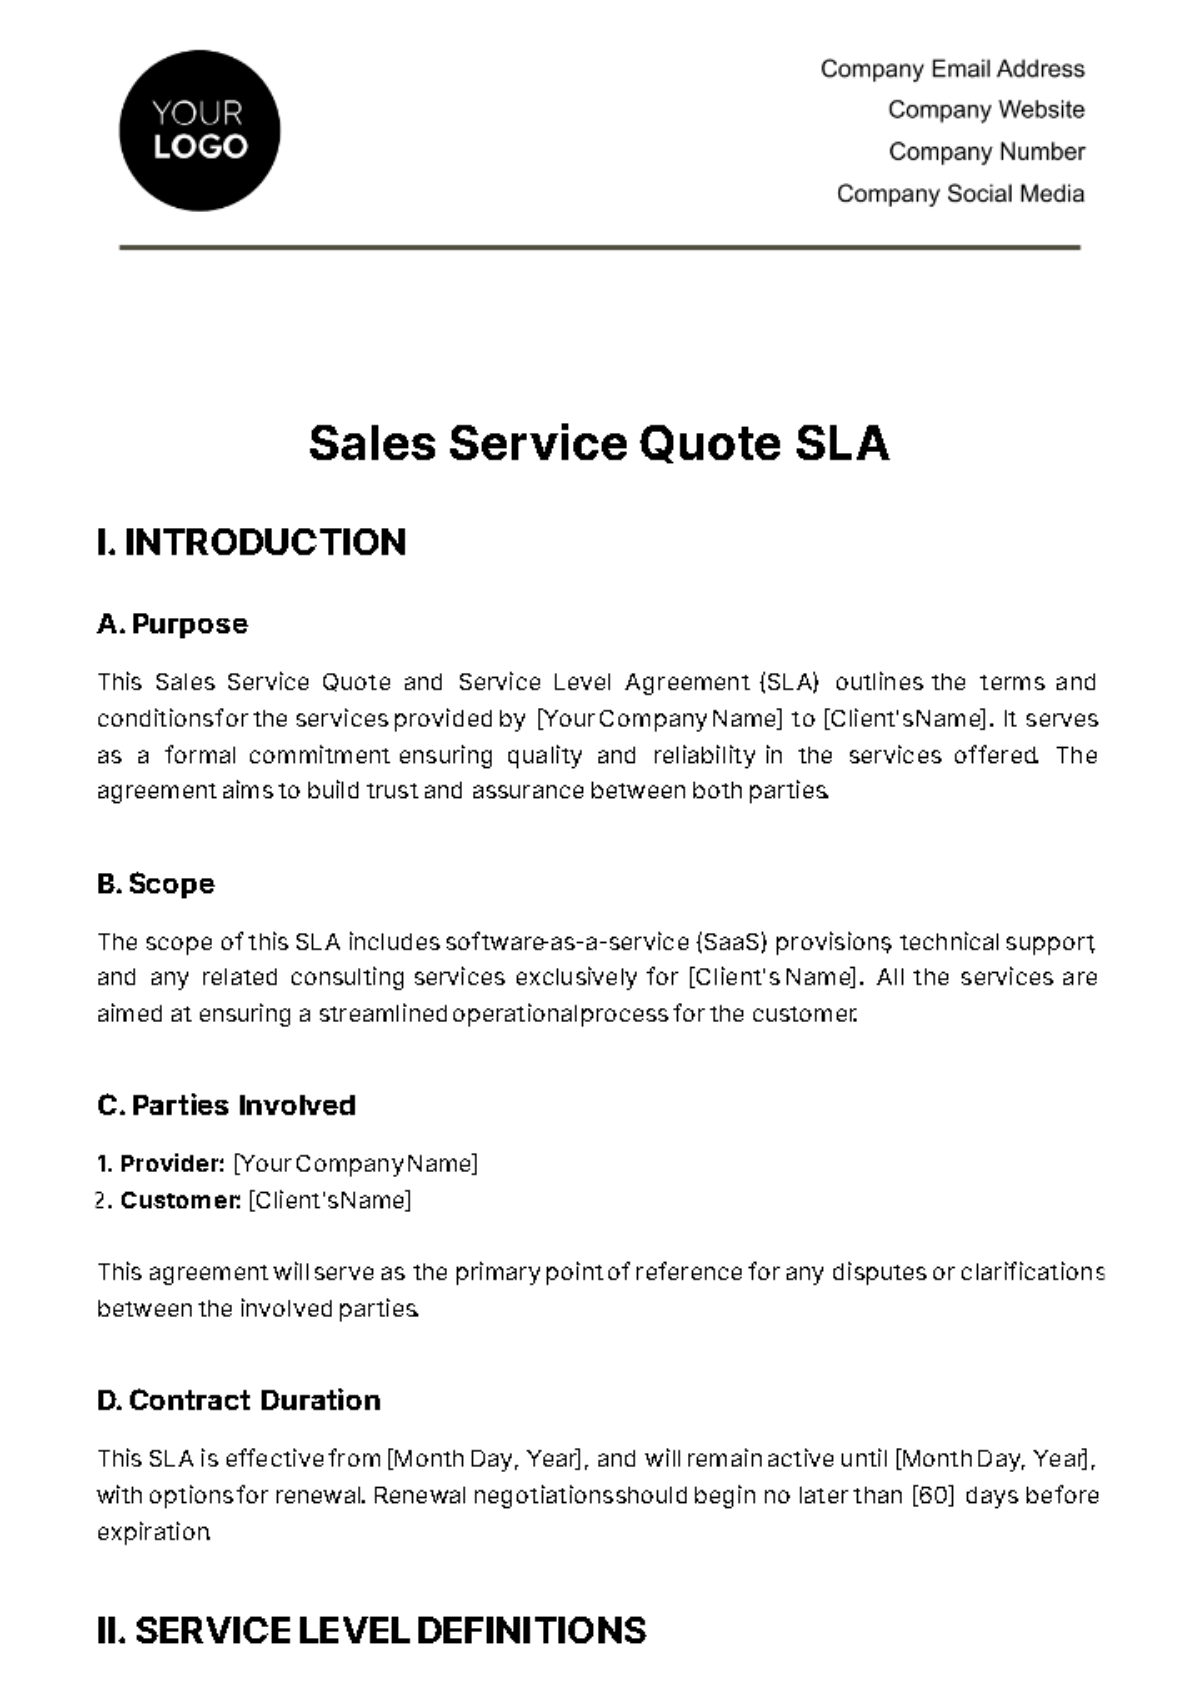 Sales Service Quote SLA Template